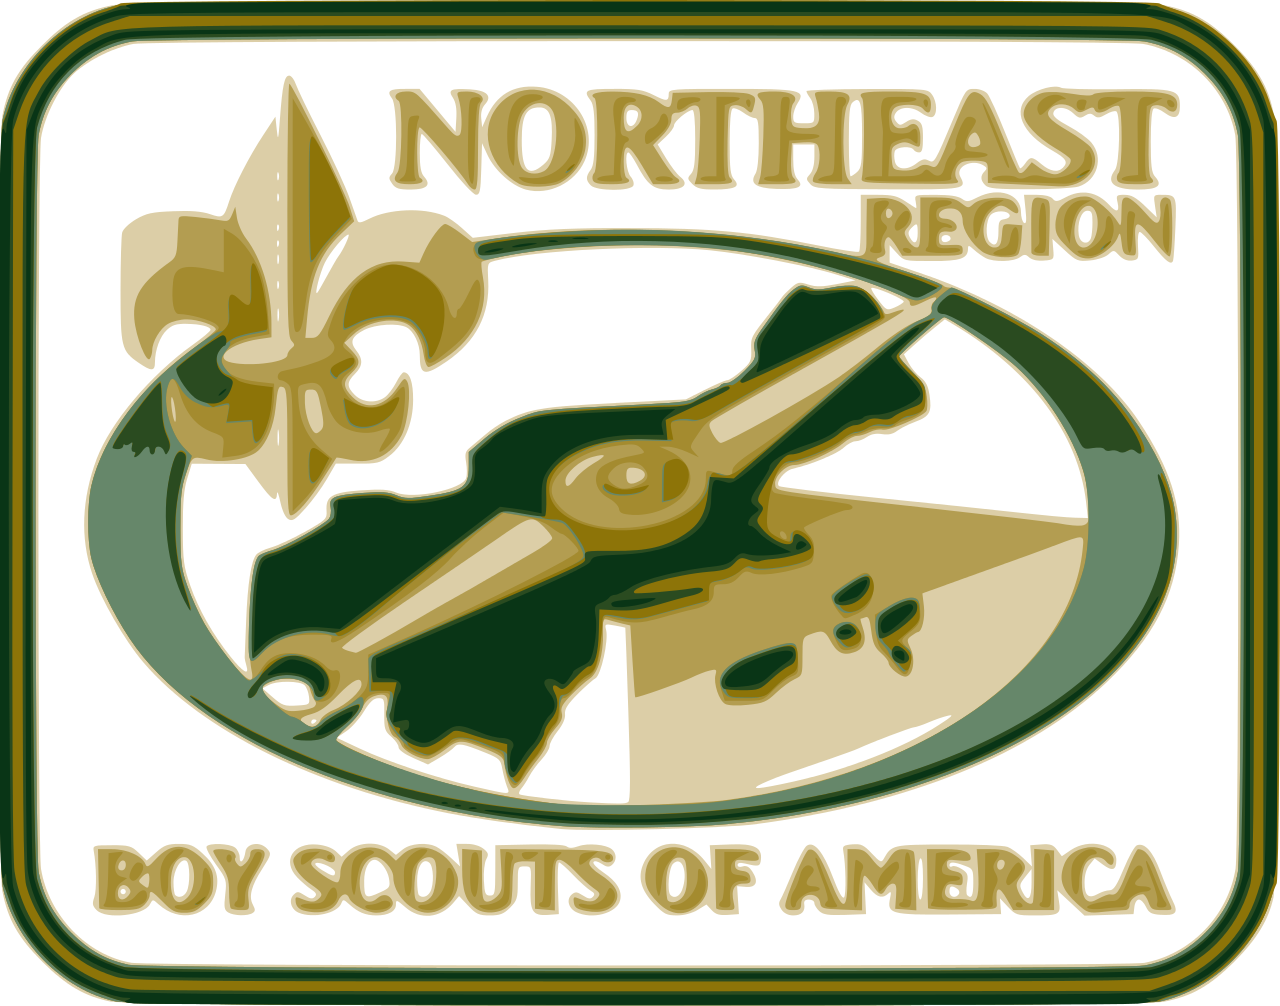 Northeast Region - Label (1280x1006)